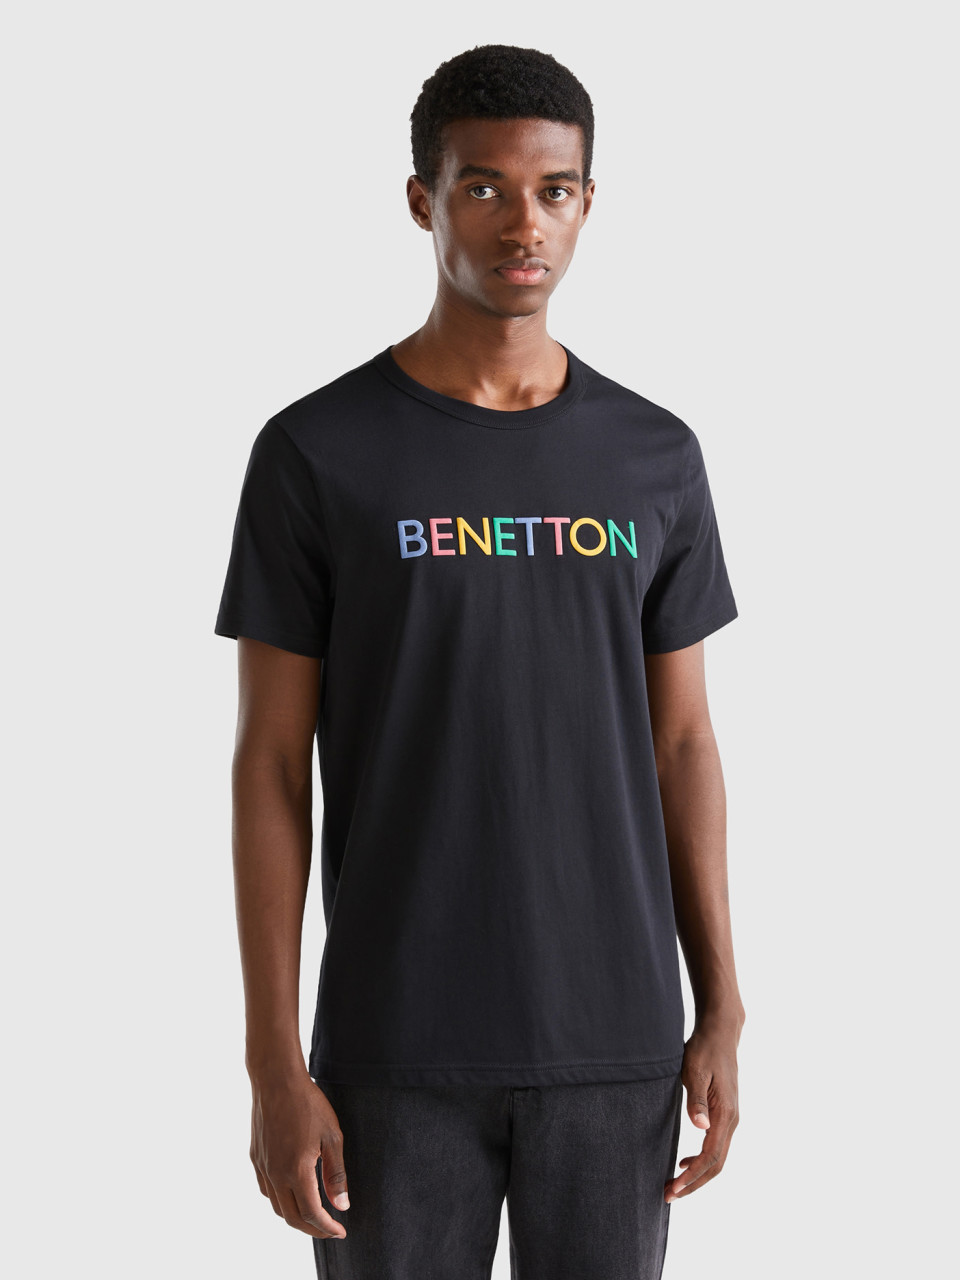 Benetton, Camiseta Negra De Algodón Orgánico Con Estampado De Logotipo, Negro, Hombre